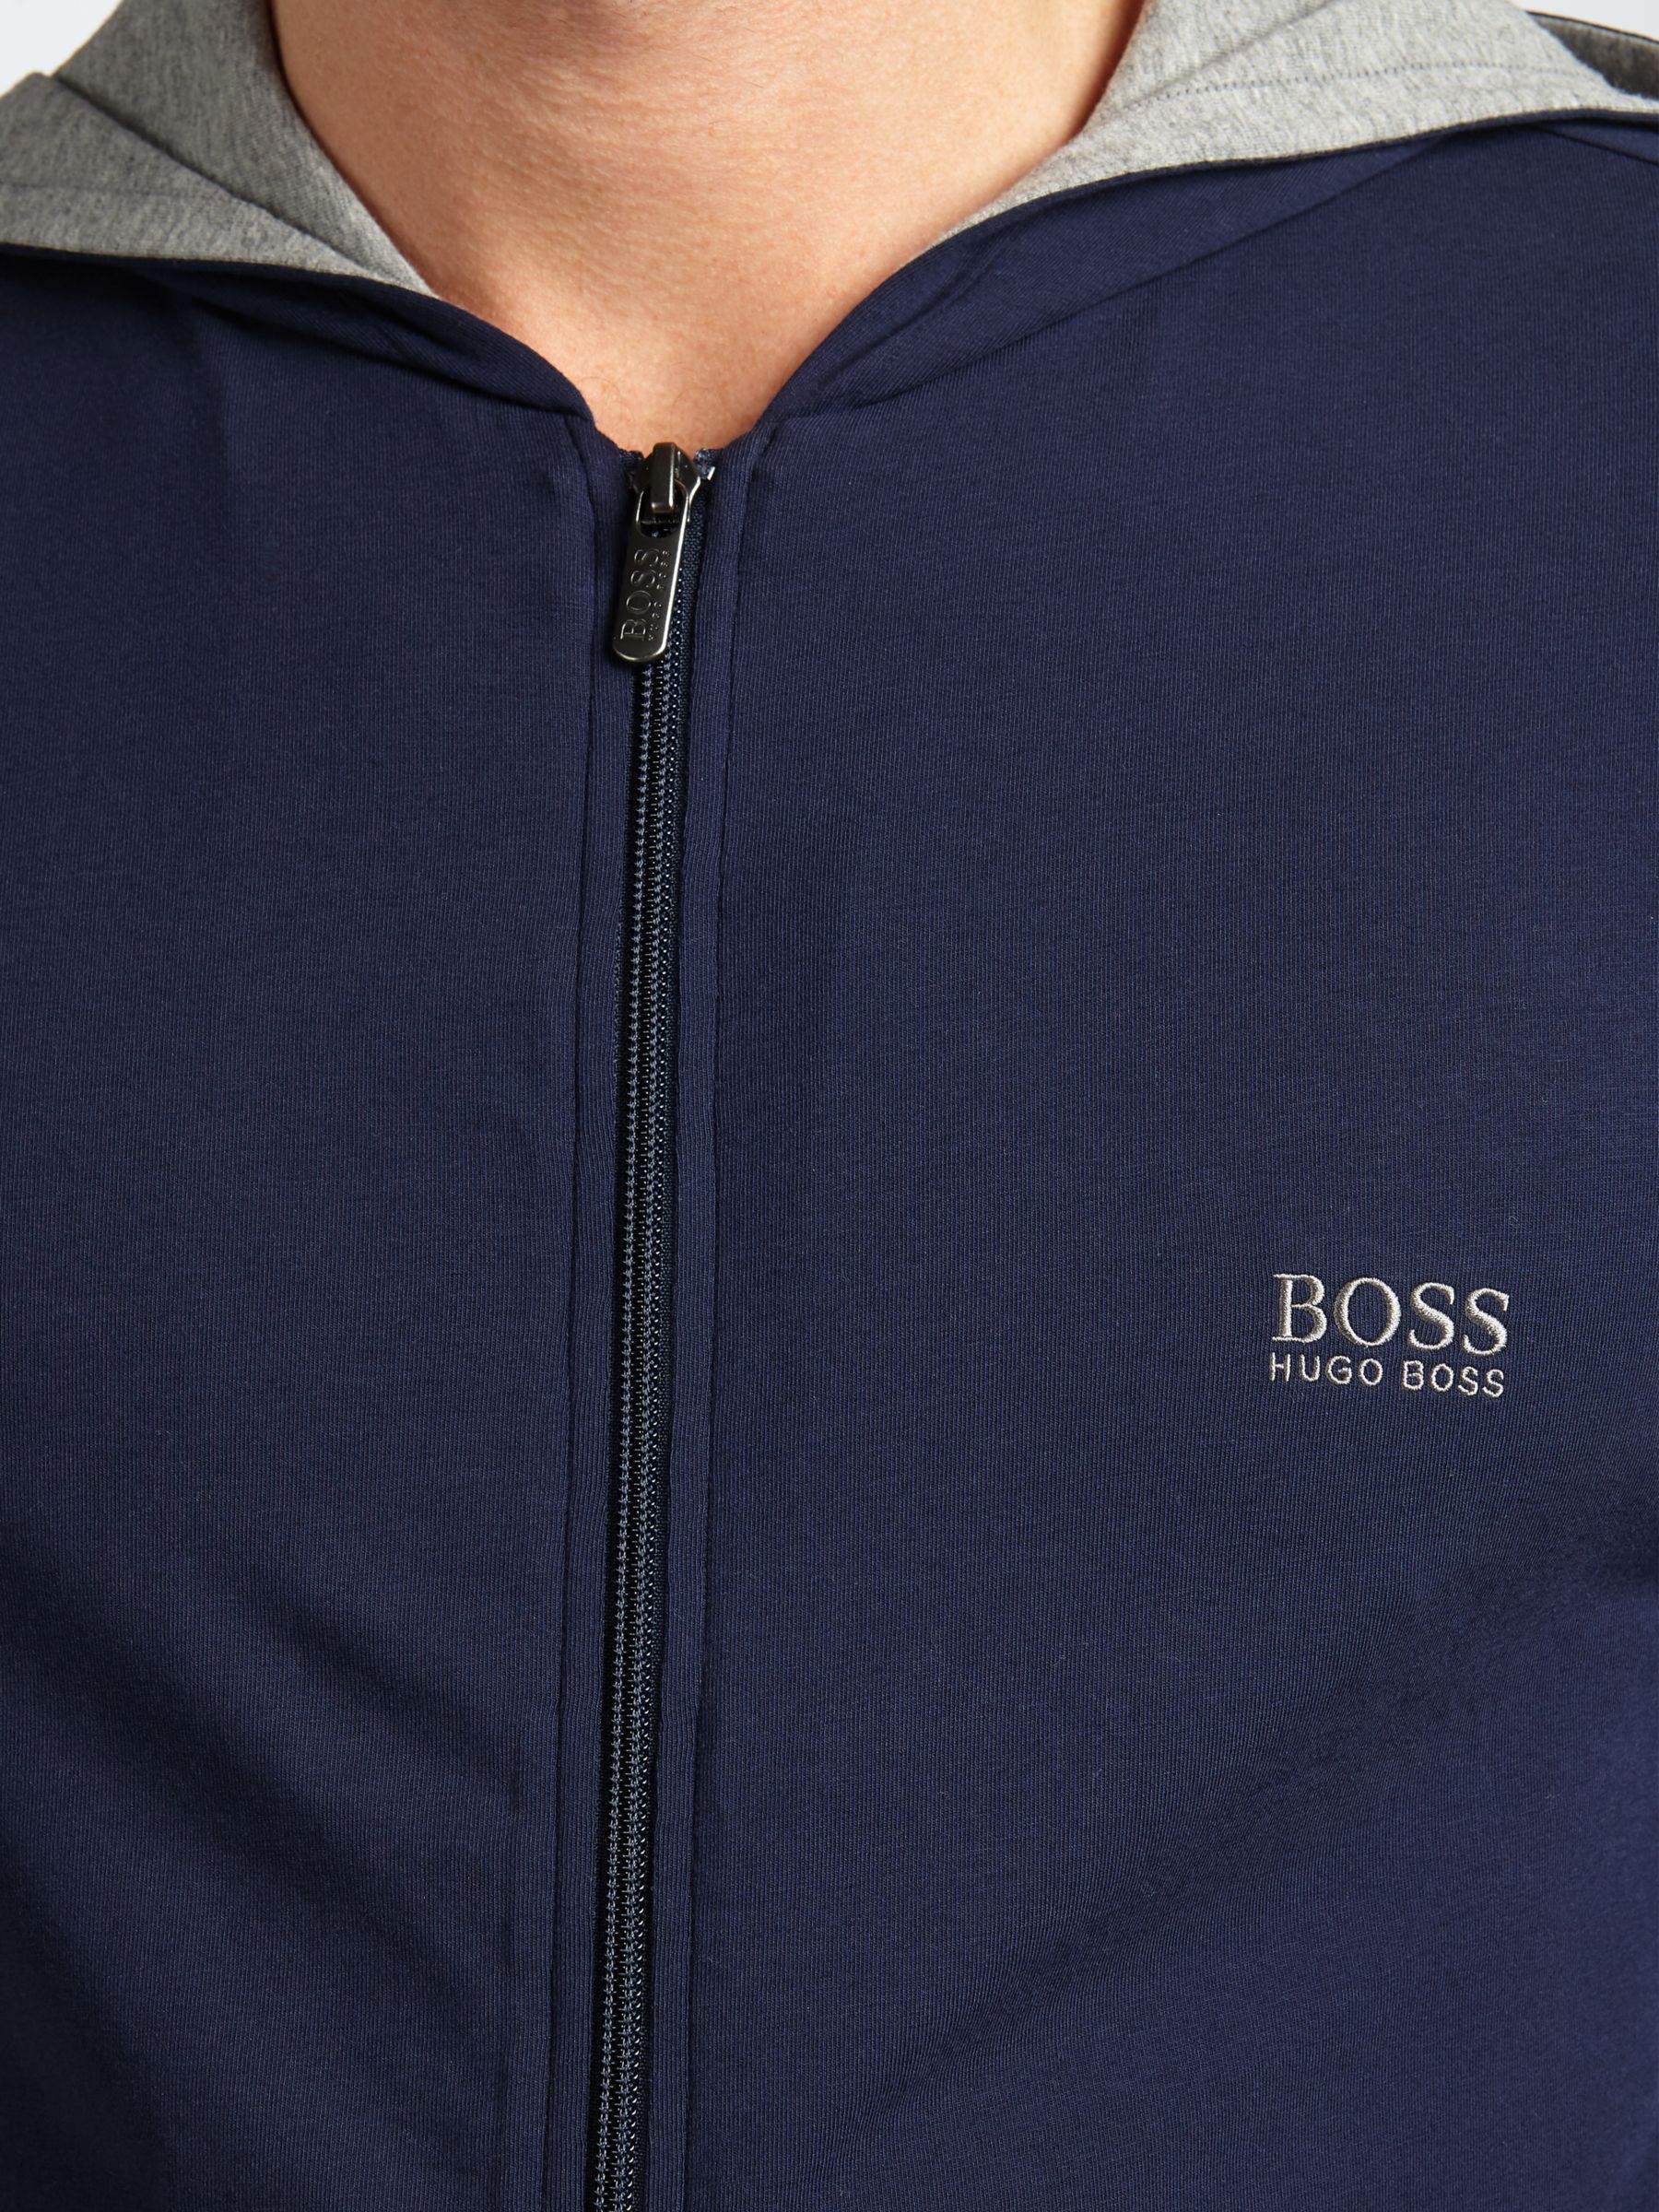 hugo boss navy zip hoodie